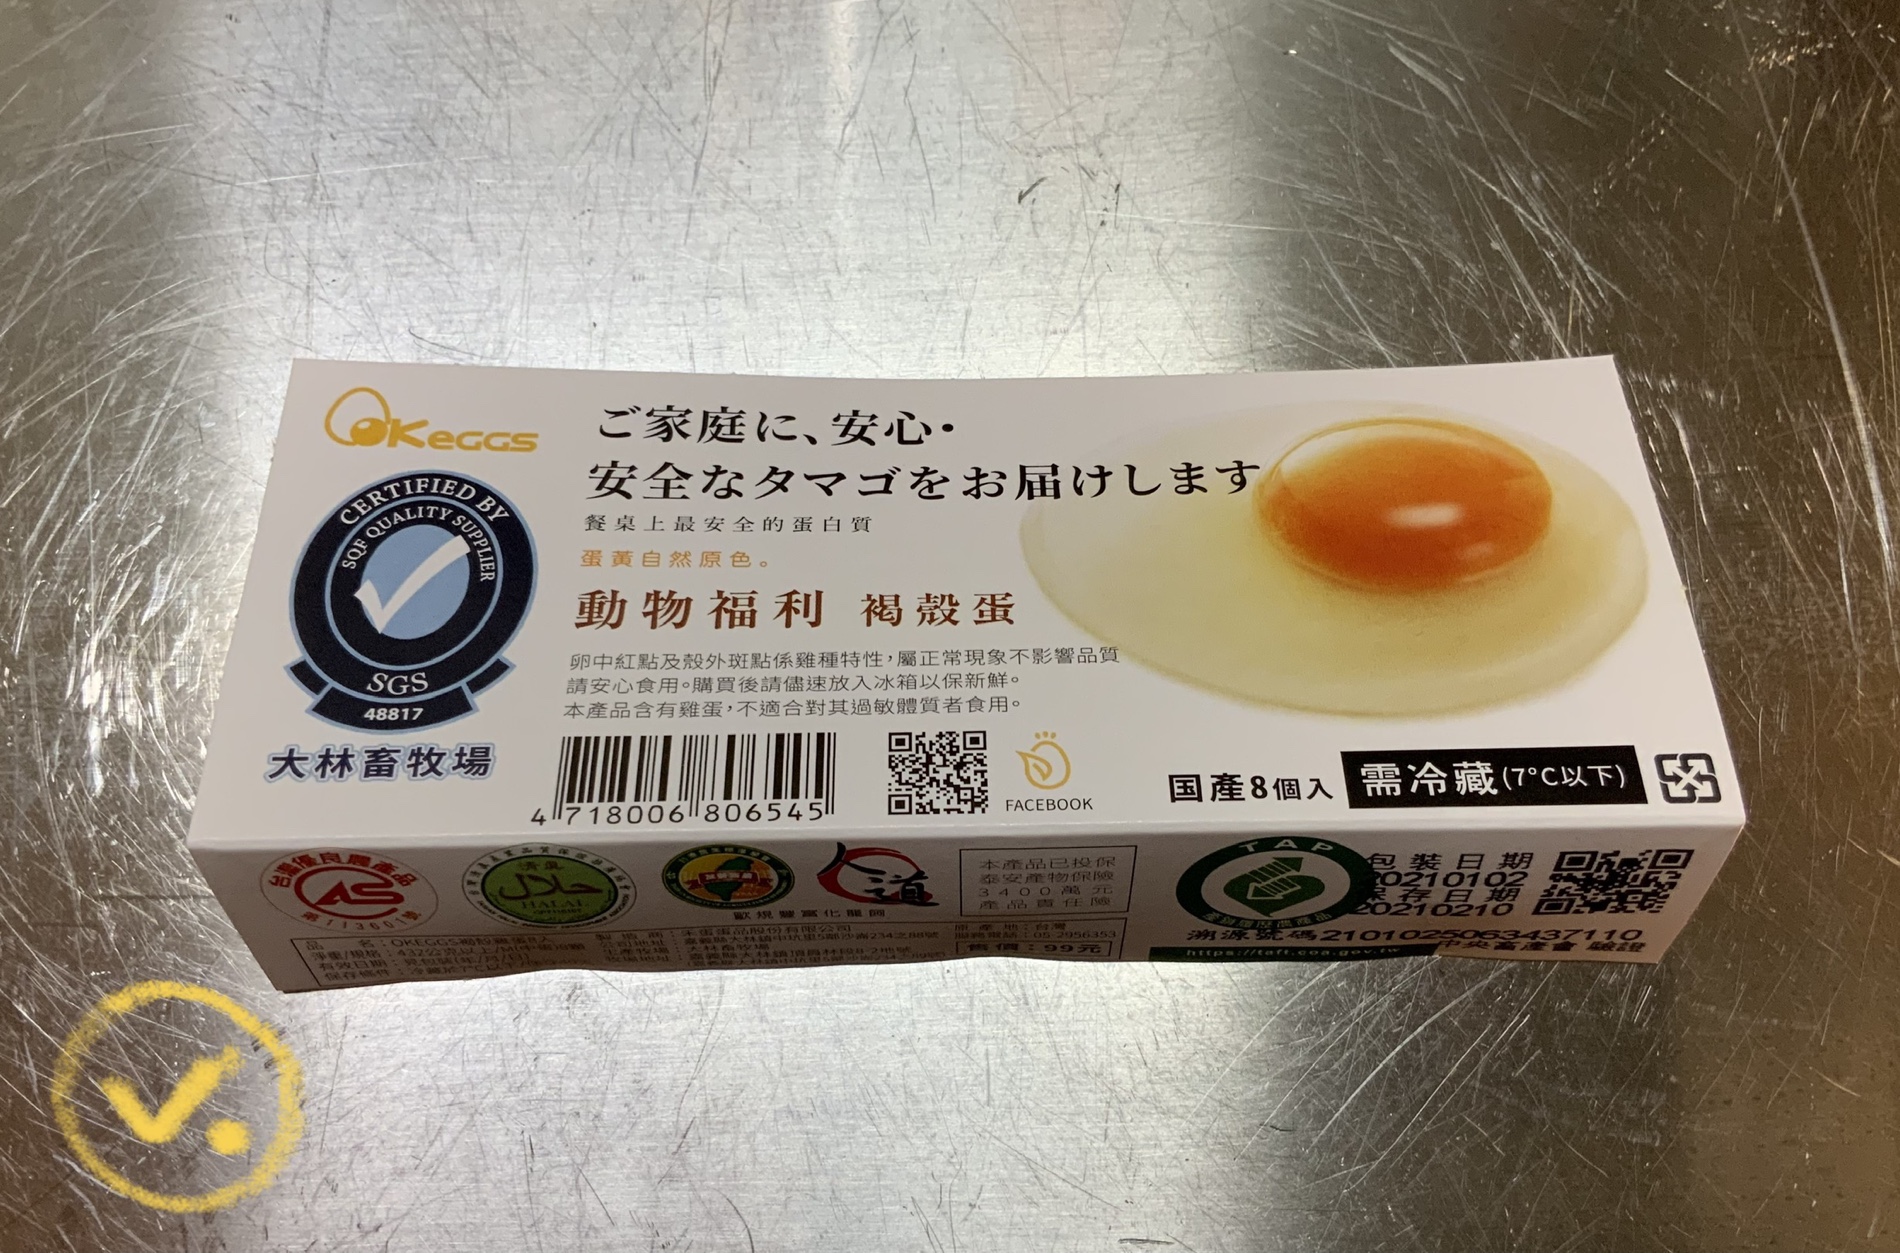 7-11 OKEGGS褐殼雞蛋讓人迷惑的偽日本標籤設計感想（大林畜牧場） img 1391